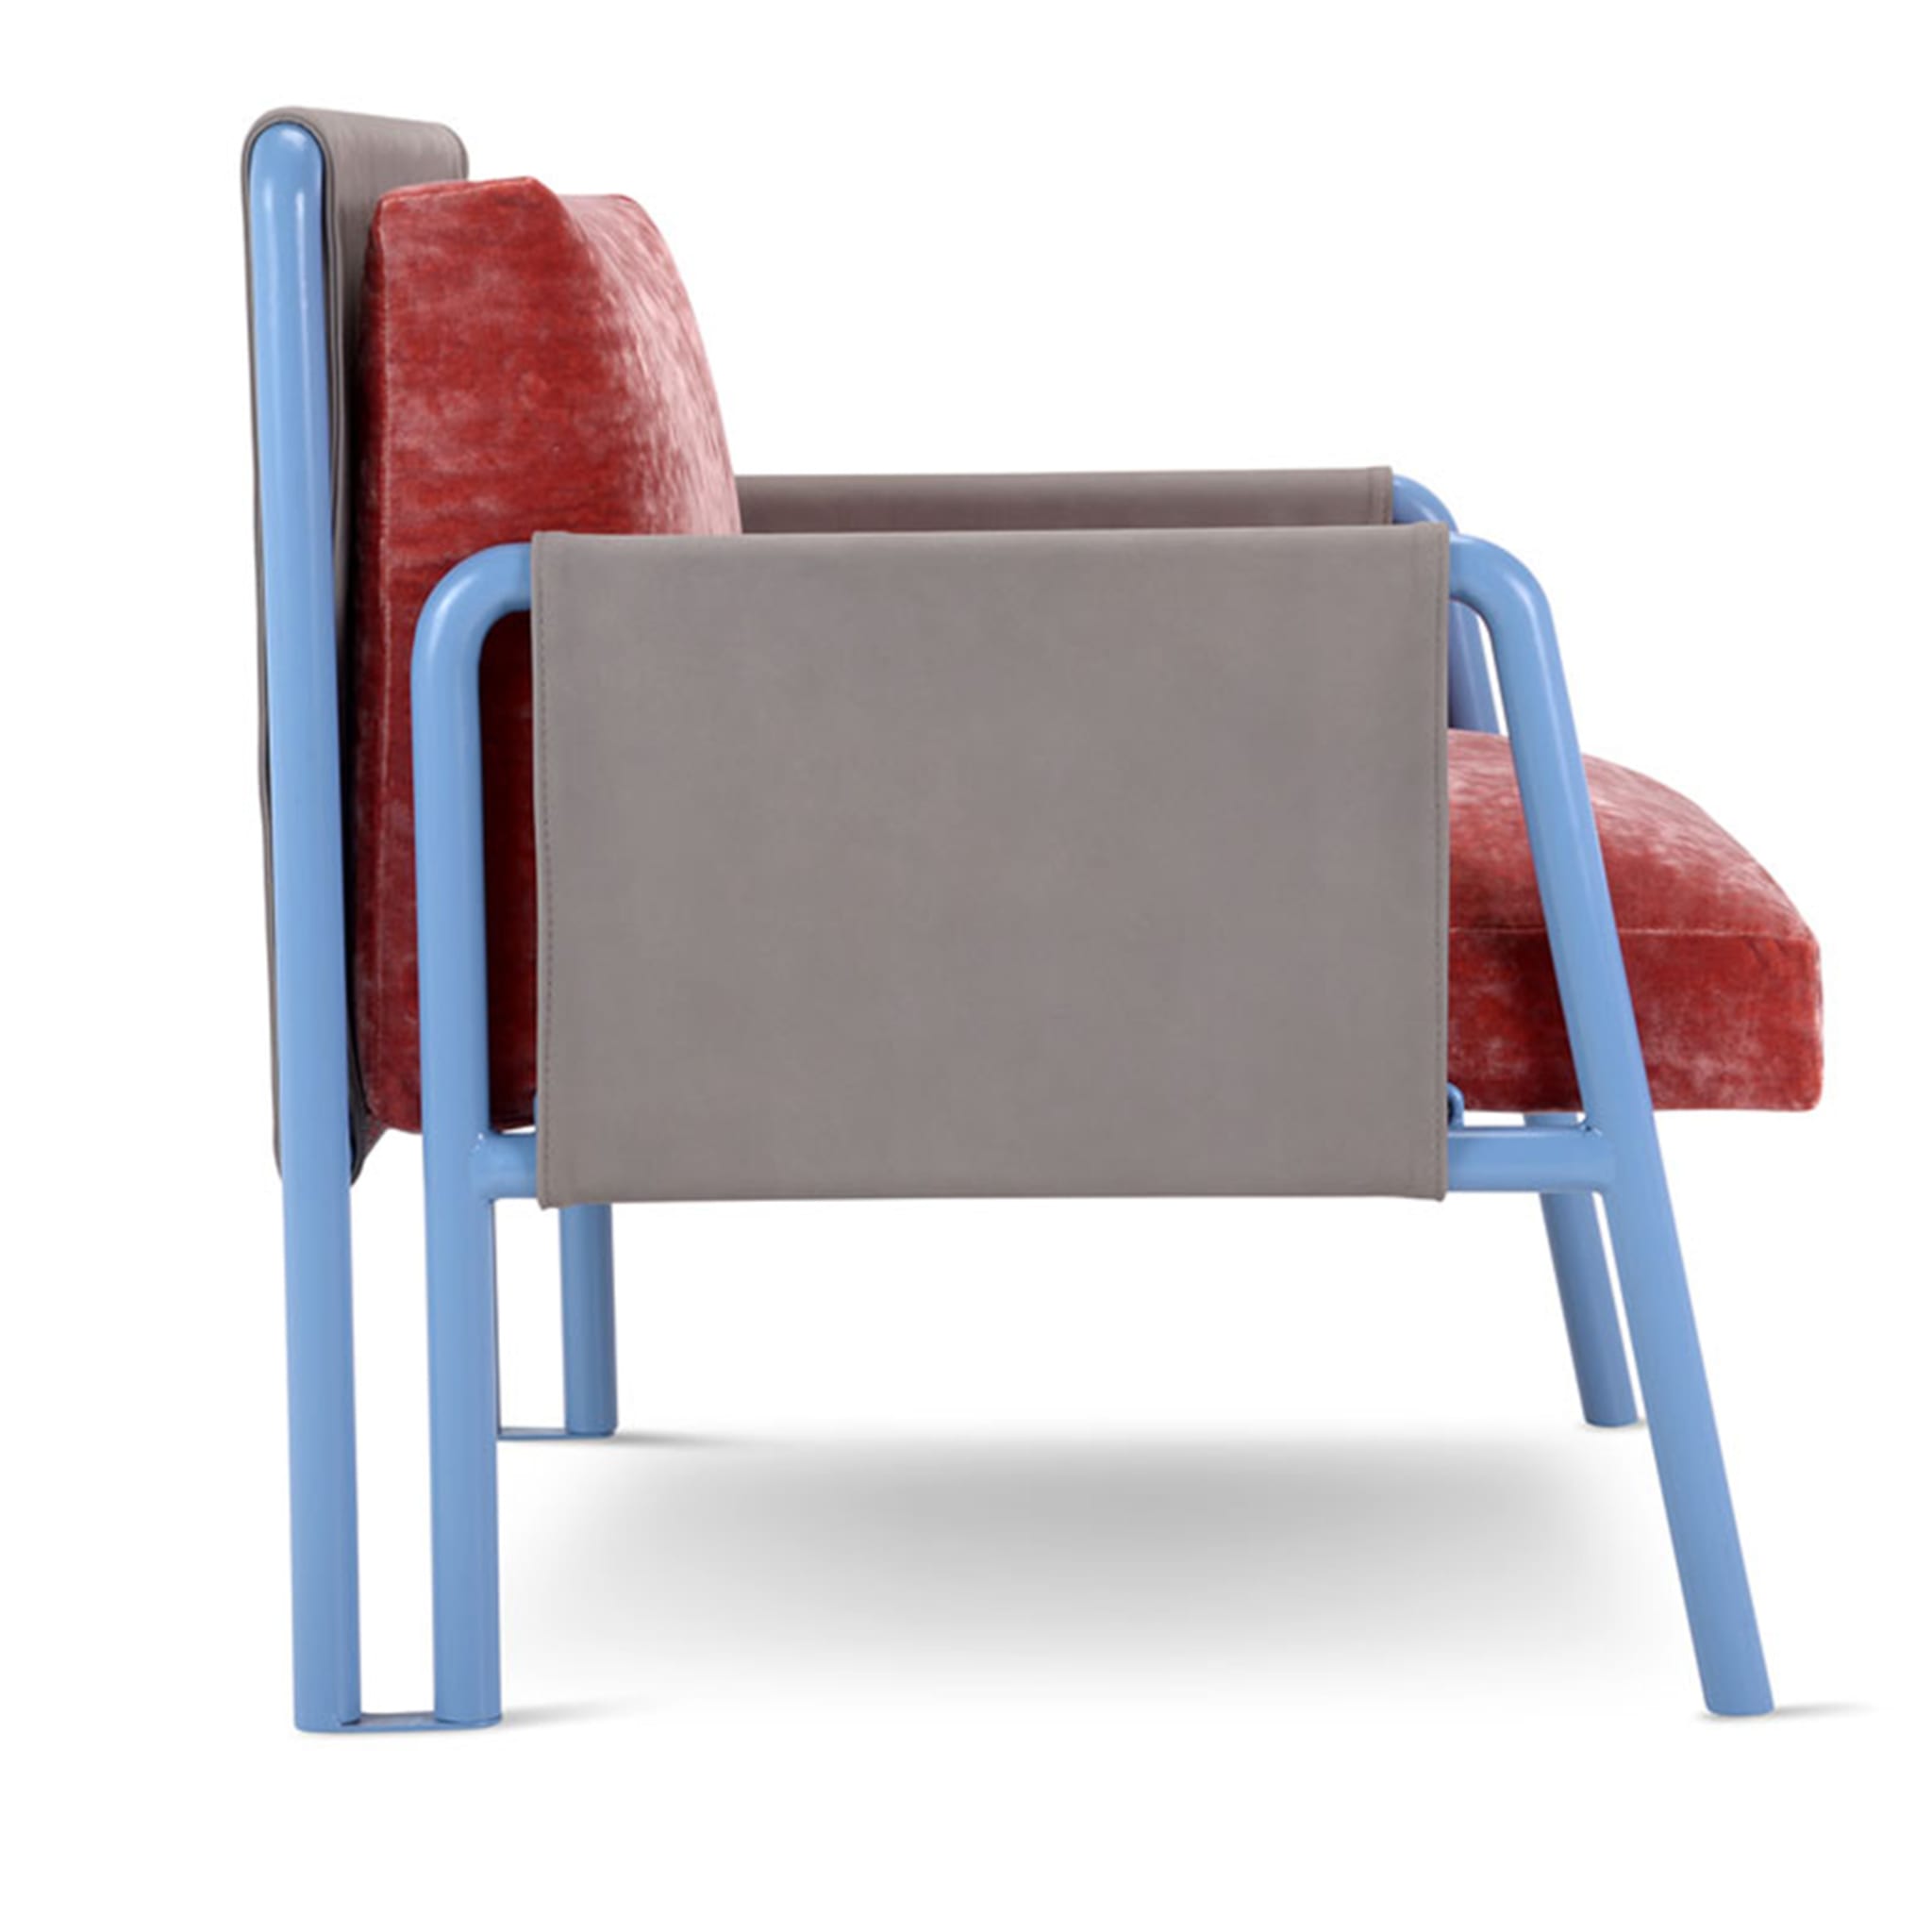 Swing Red Chenille & Azure Armchair by Debonademeo - Alternative view 2